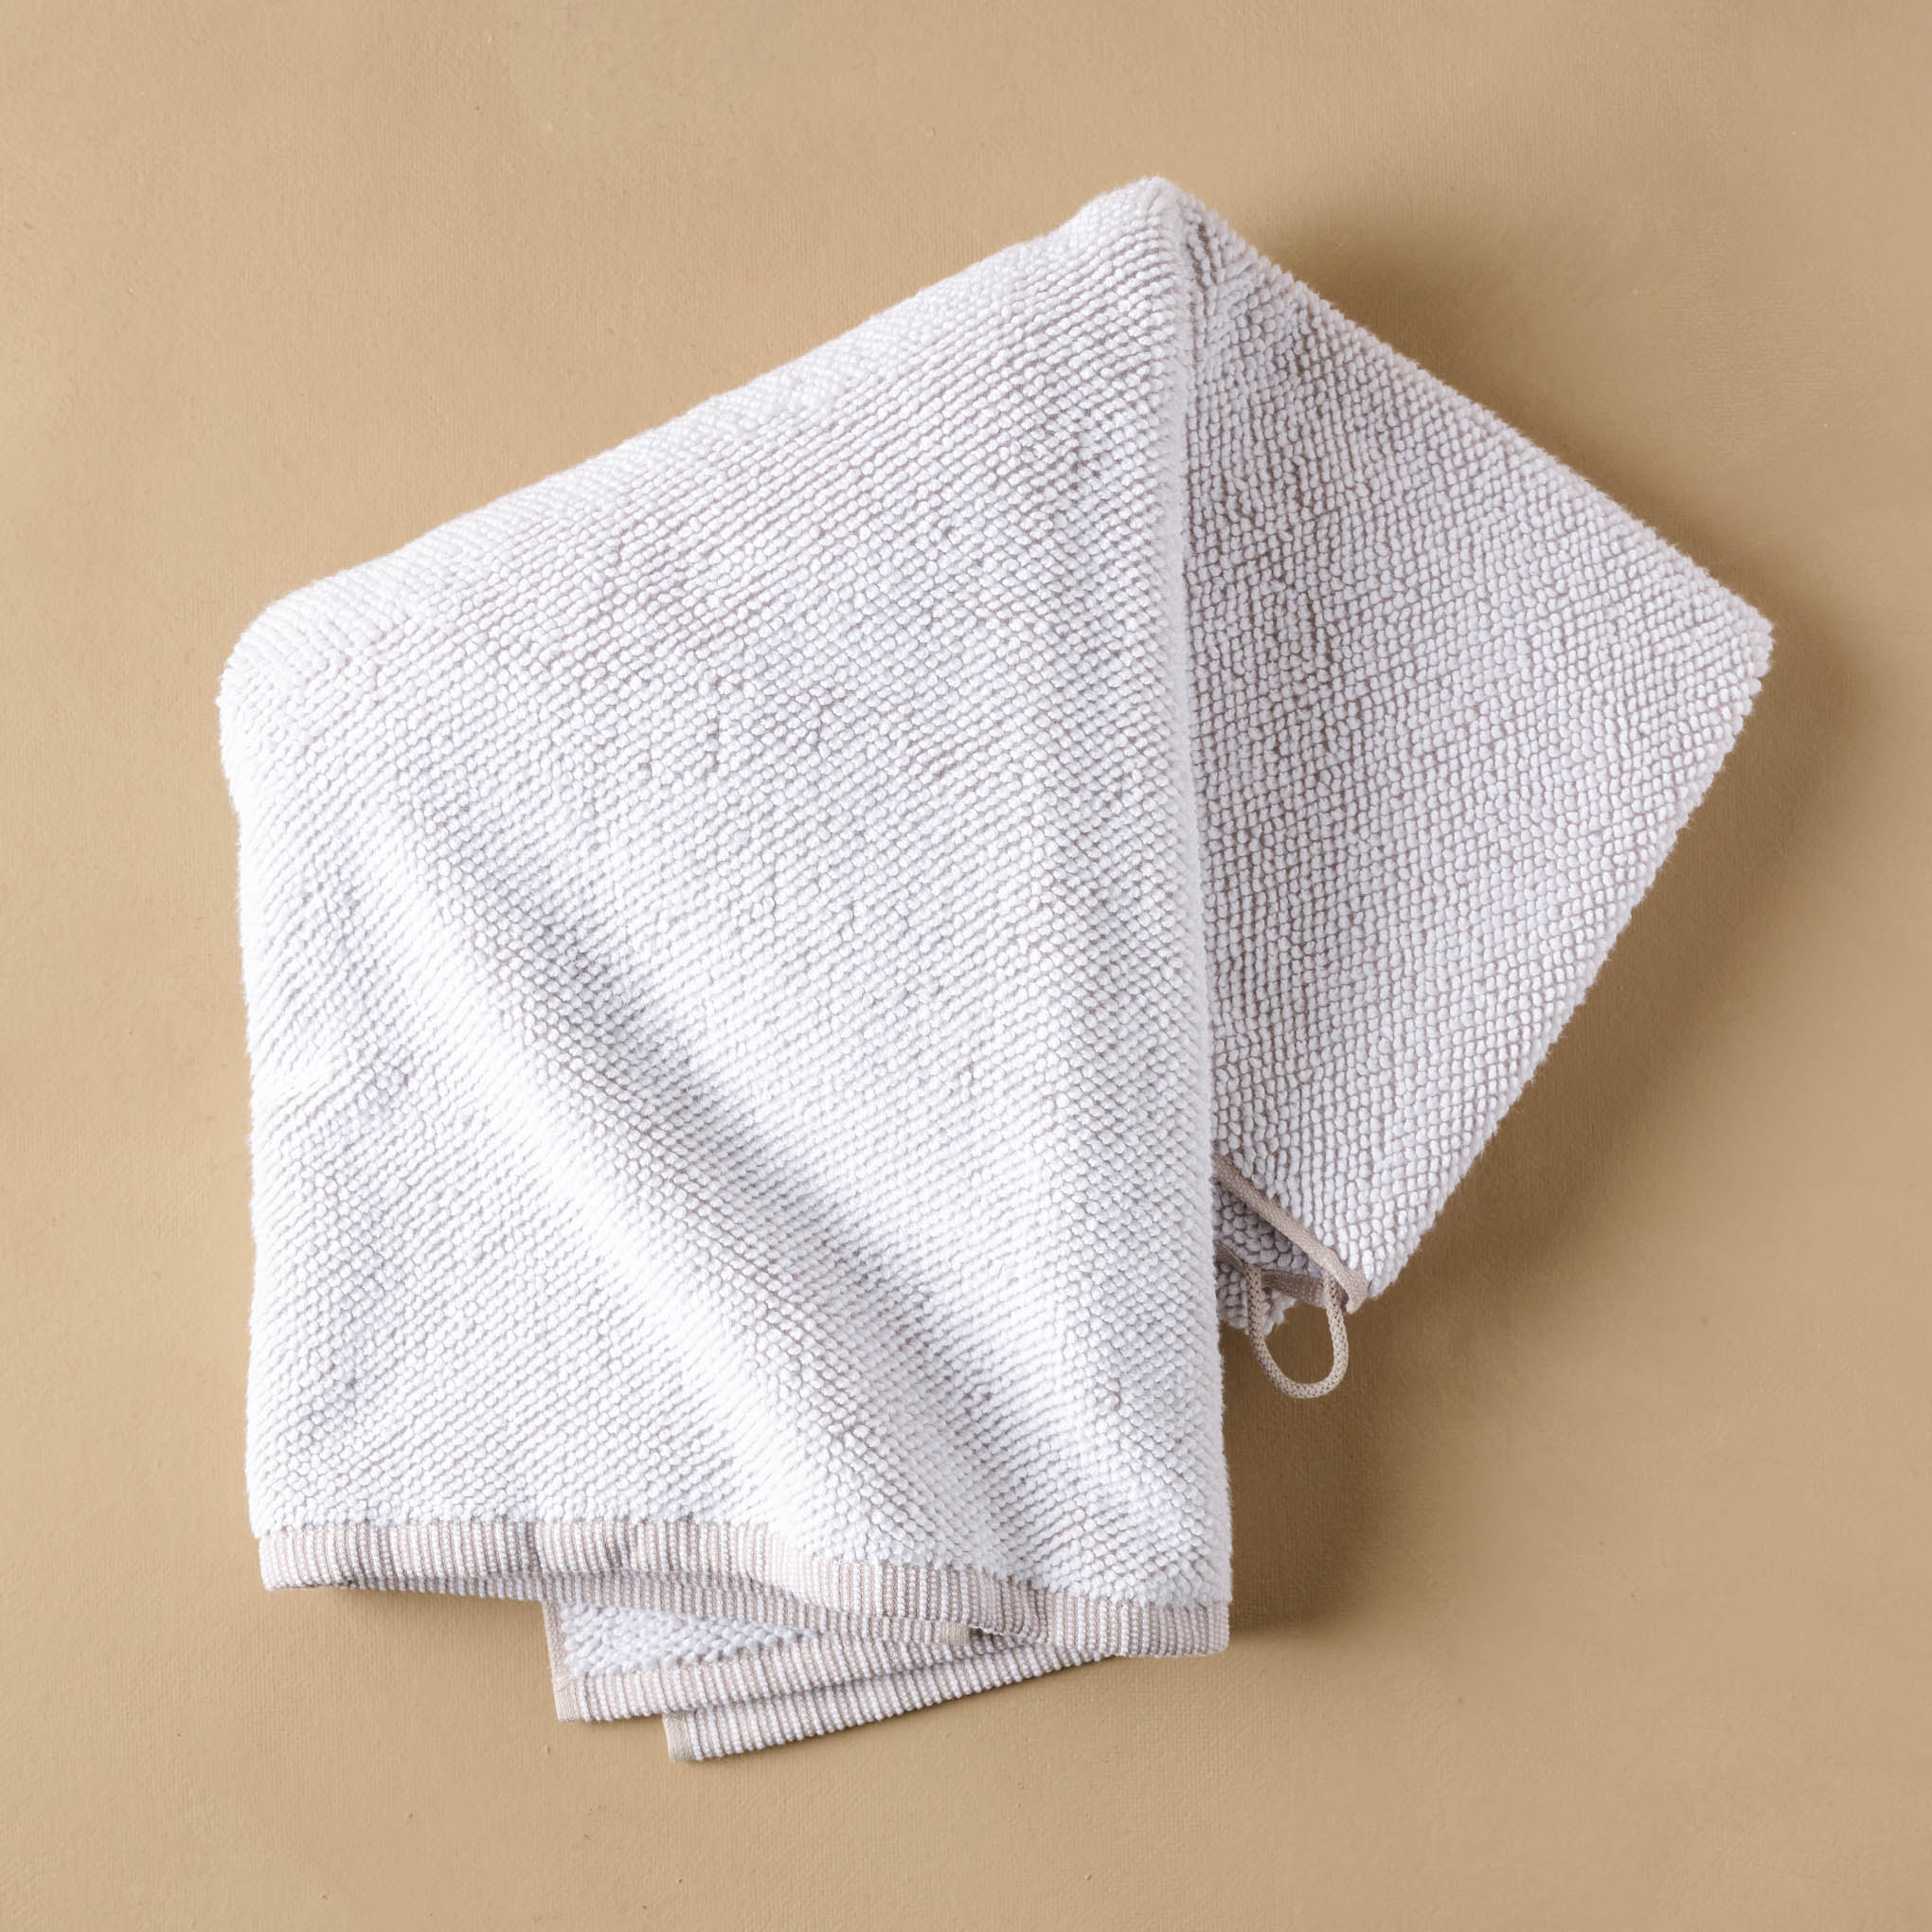 Linen Assisi Textured Towel